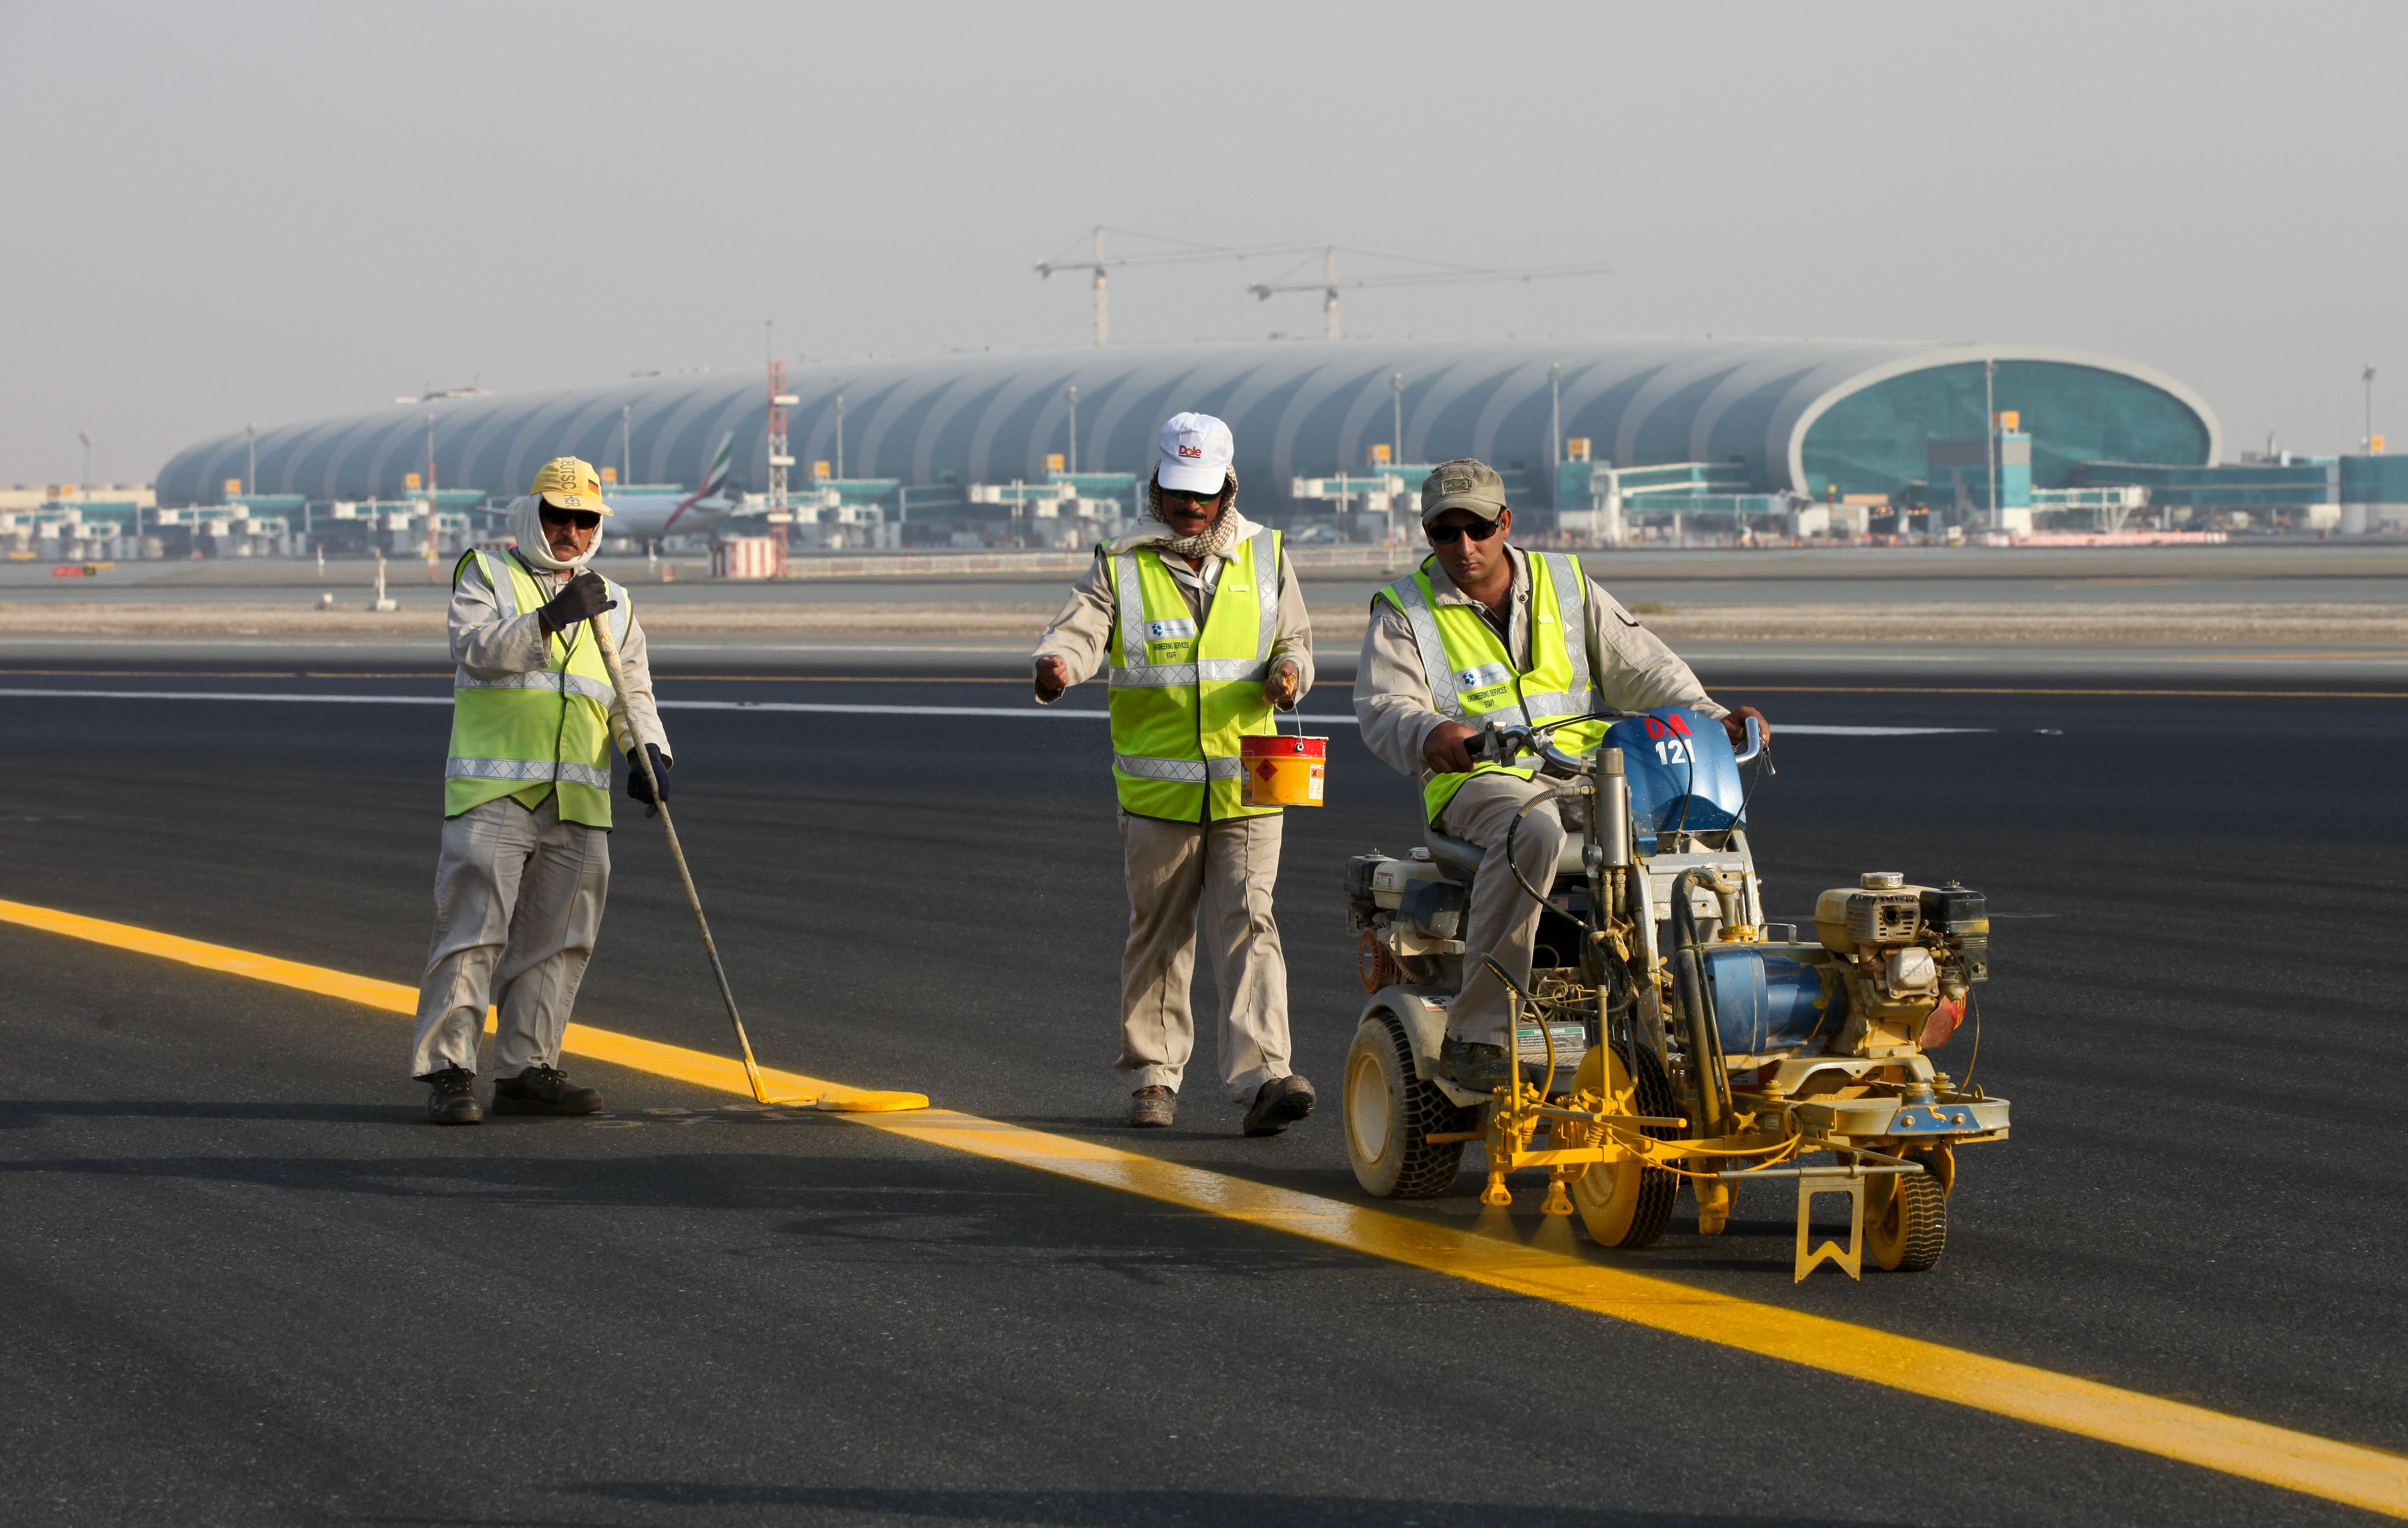 Runway maintenance takes place at Dubai International Airport